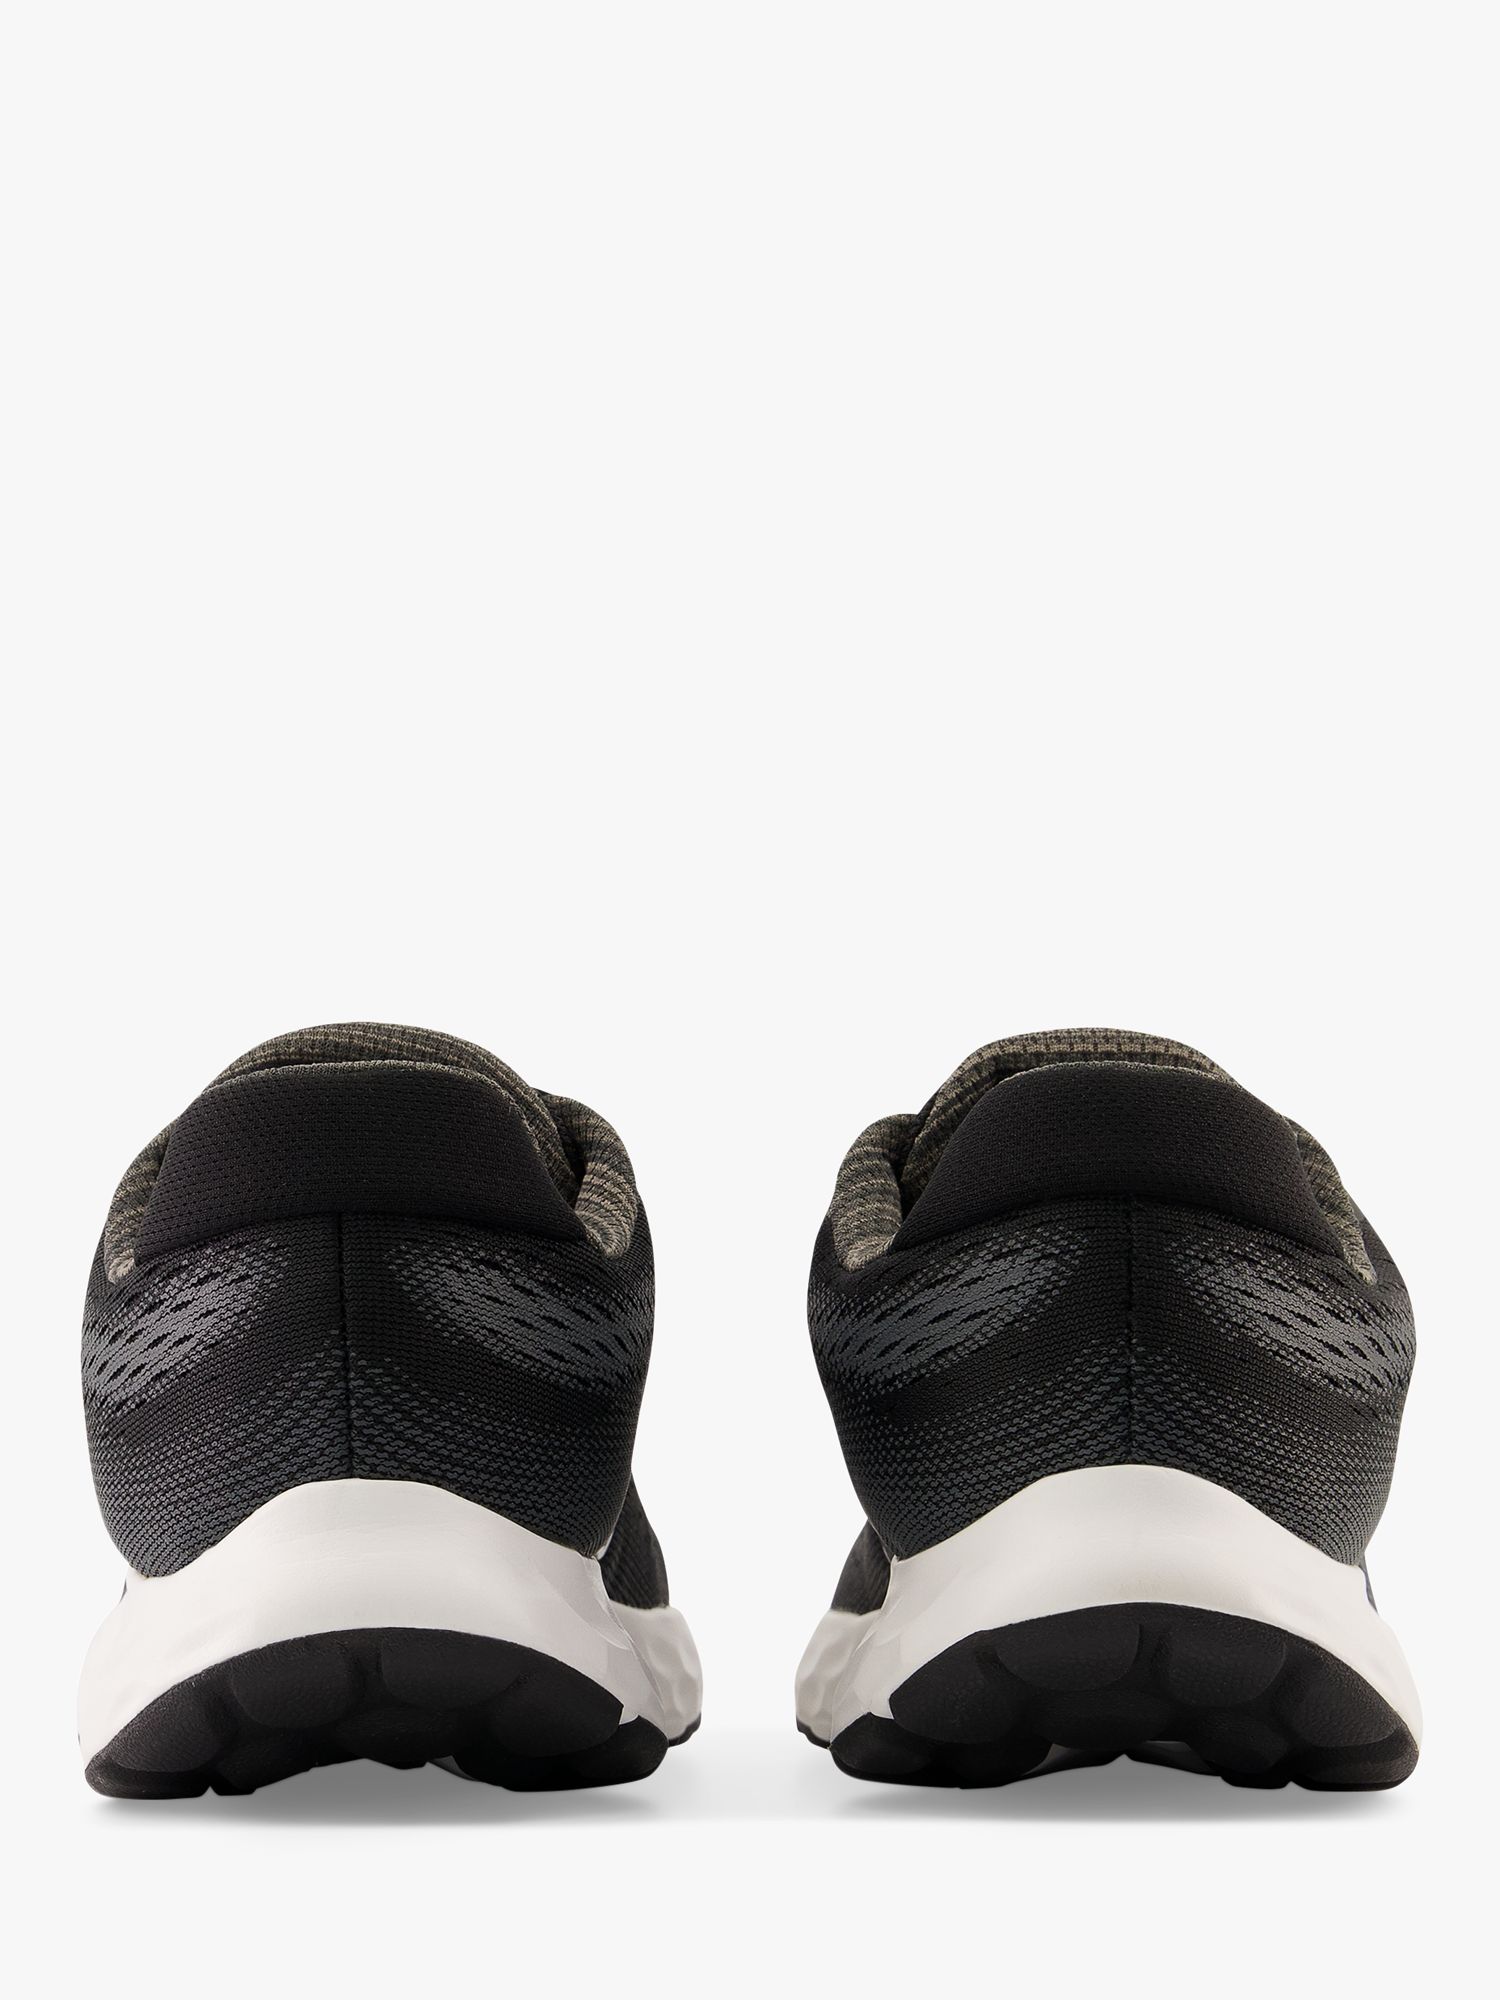 Buy New Balance 520v8 Men's Running Shoes Online at johnlewis.com